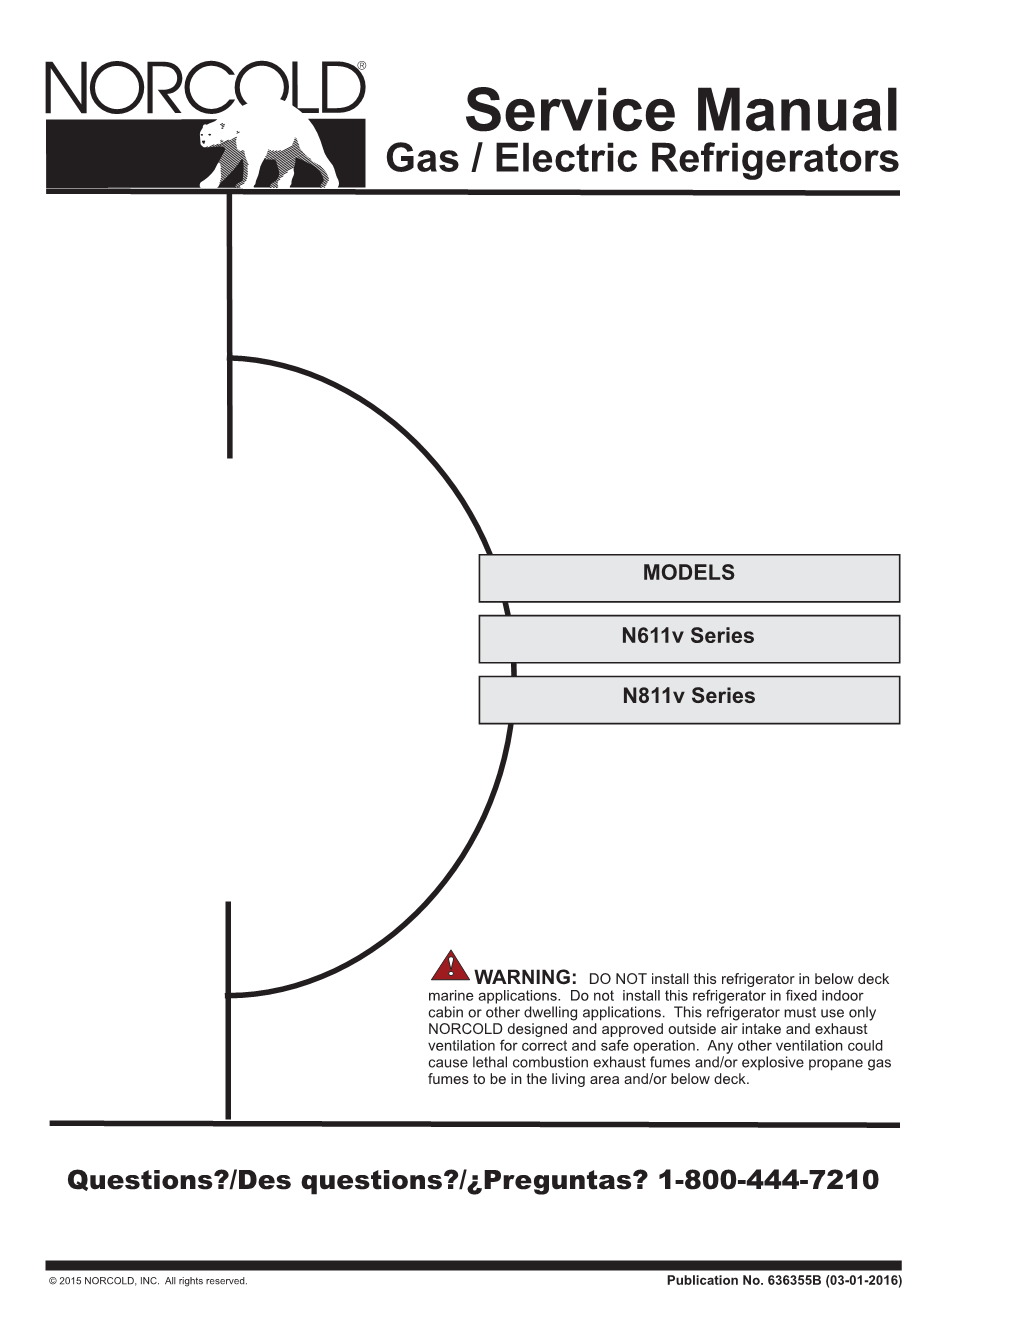 Service Manual Gas / Electric Refrigerators